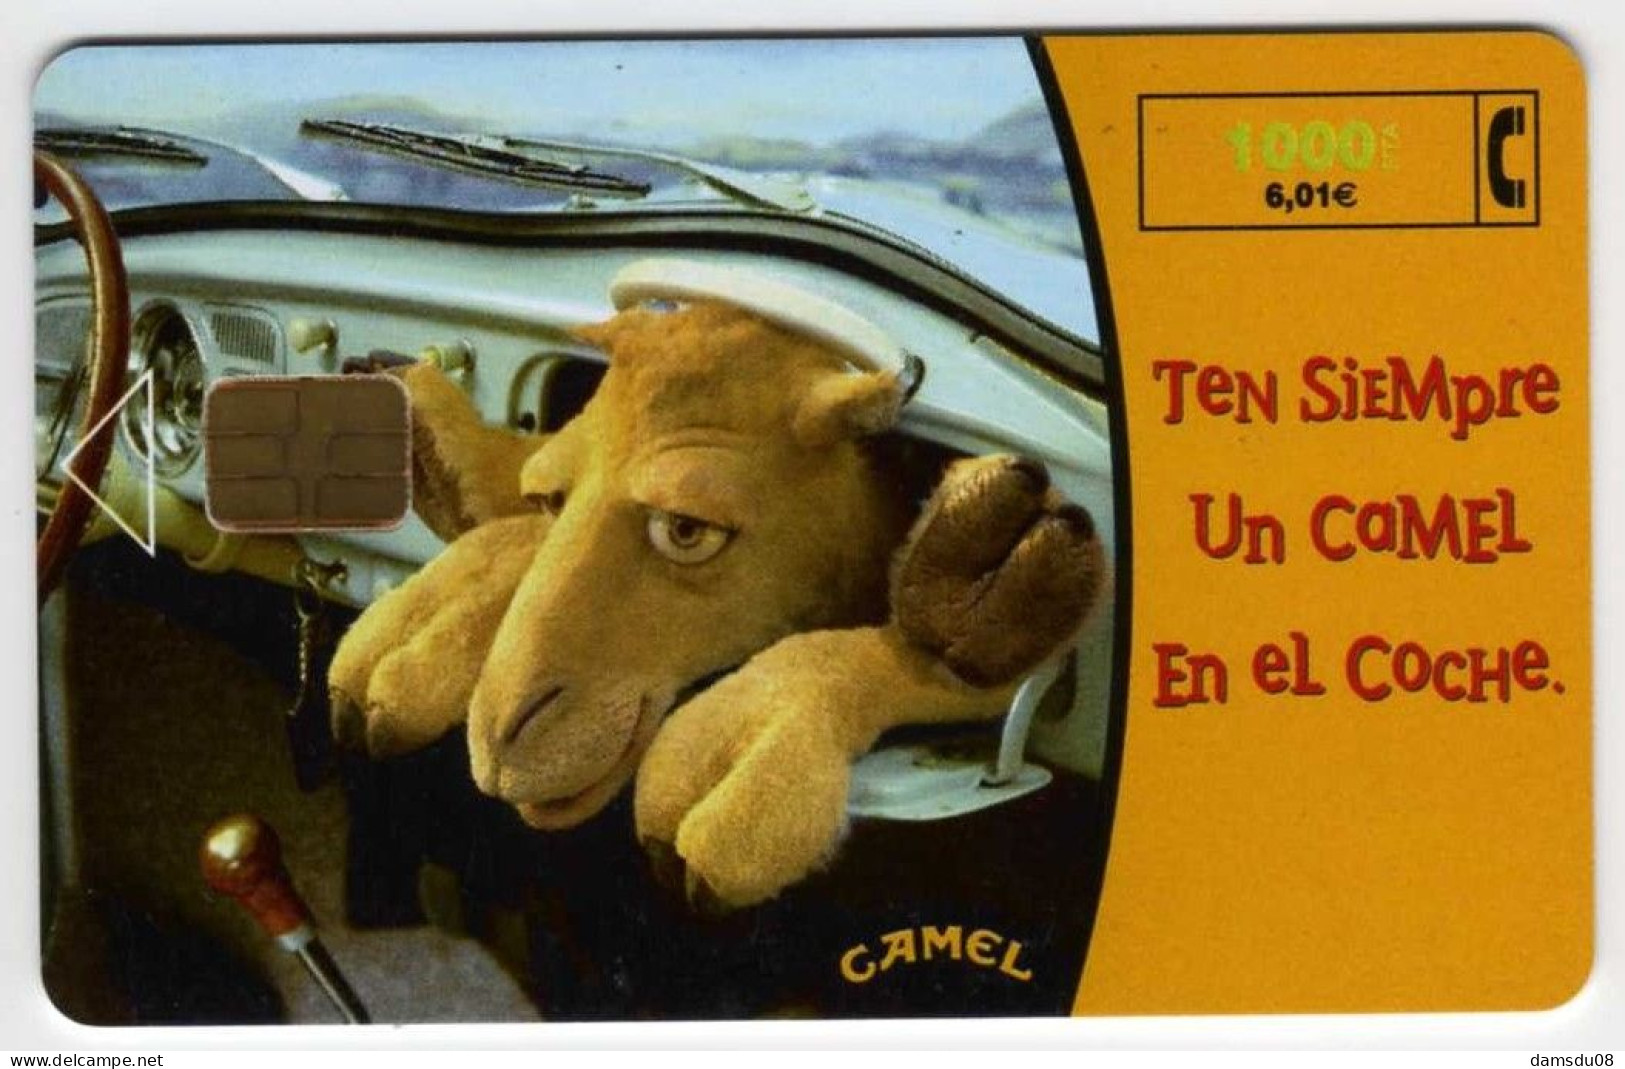 Espagne 1000 PTA Camel 01/99 1035000 Exemplaires Vide - Basic Issues